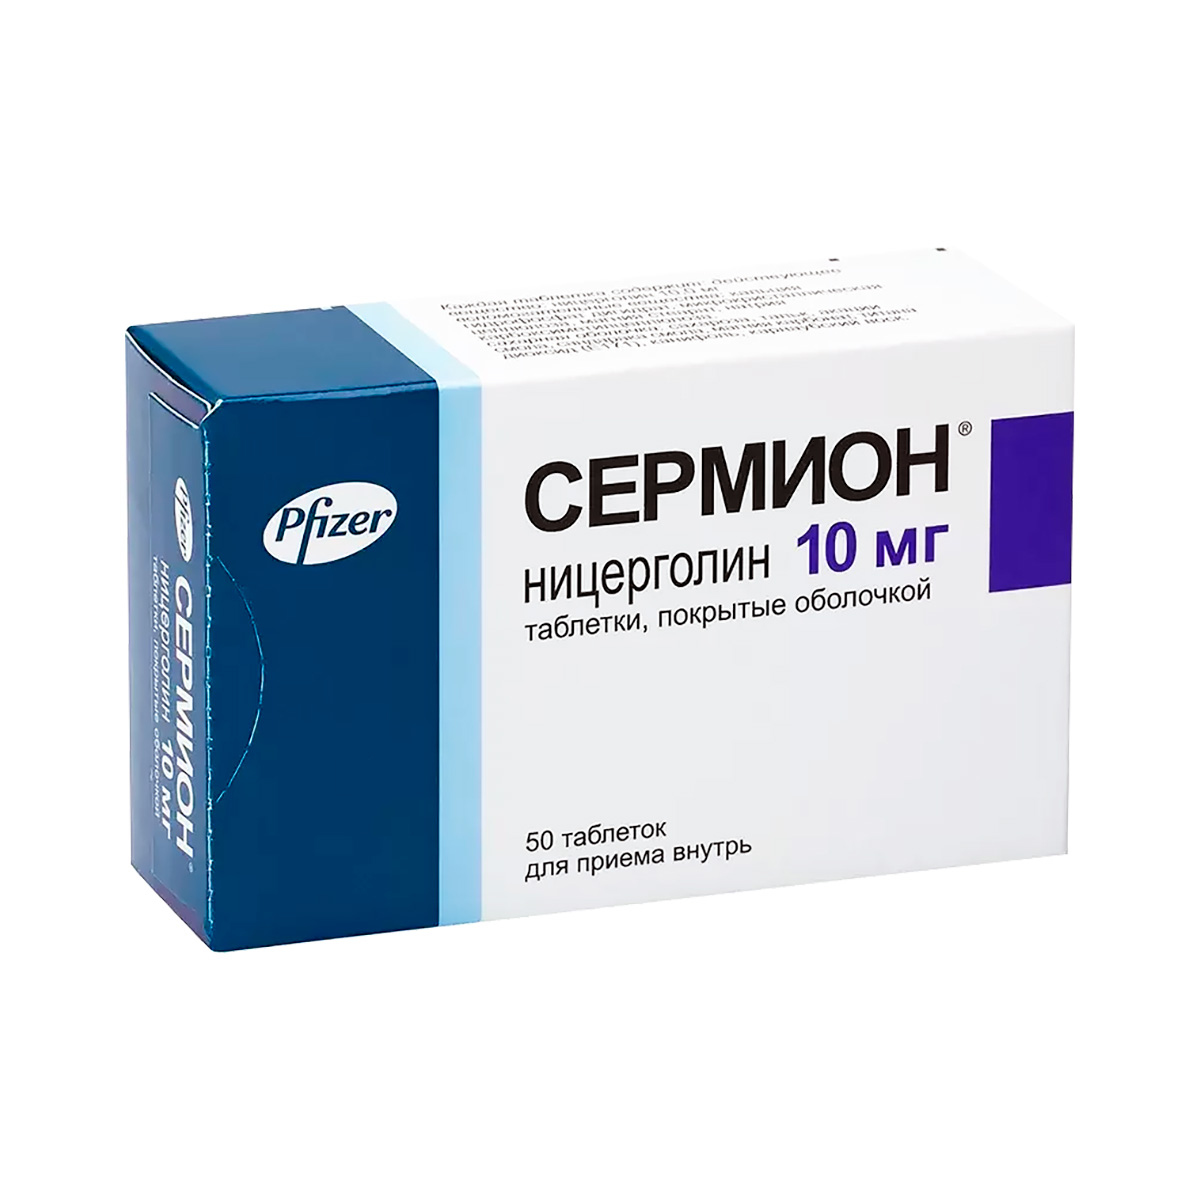 Сермион 10 мг таблетки покрытые оболочкой 50 шт